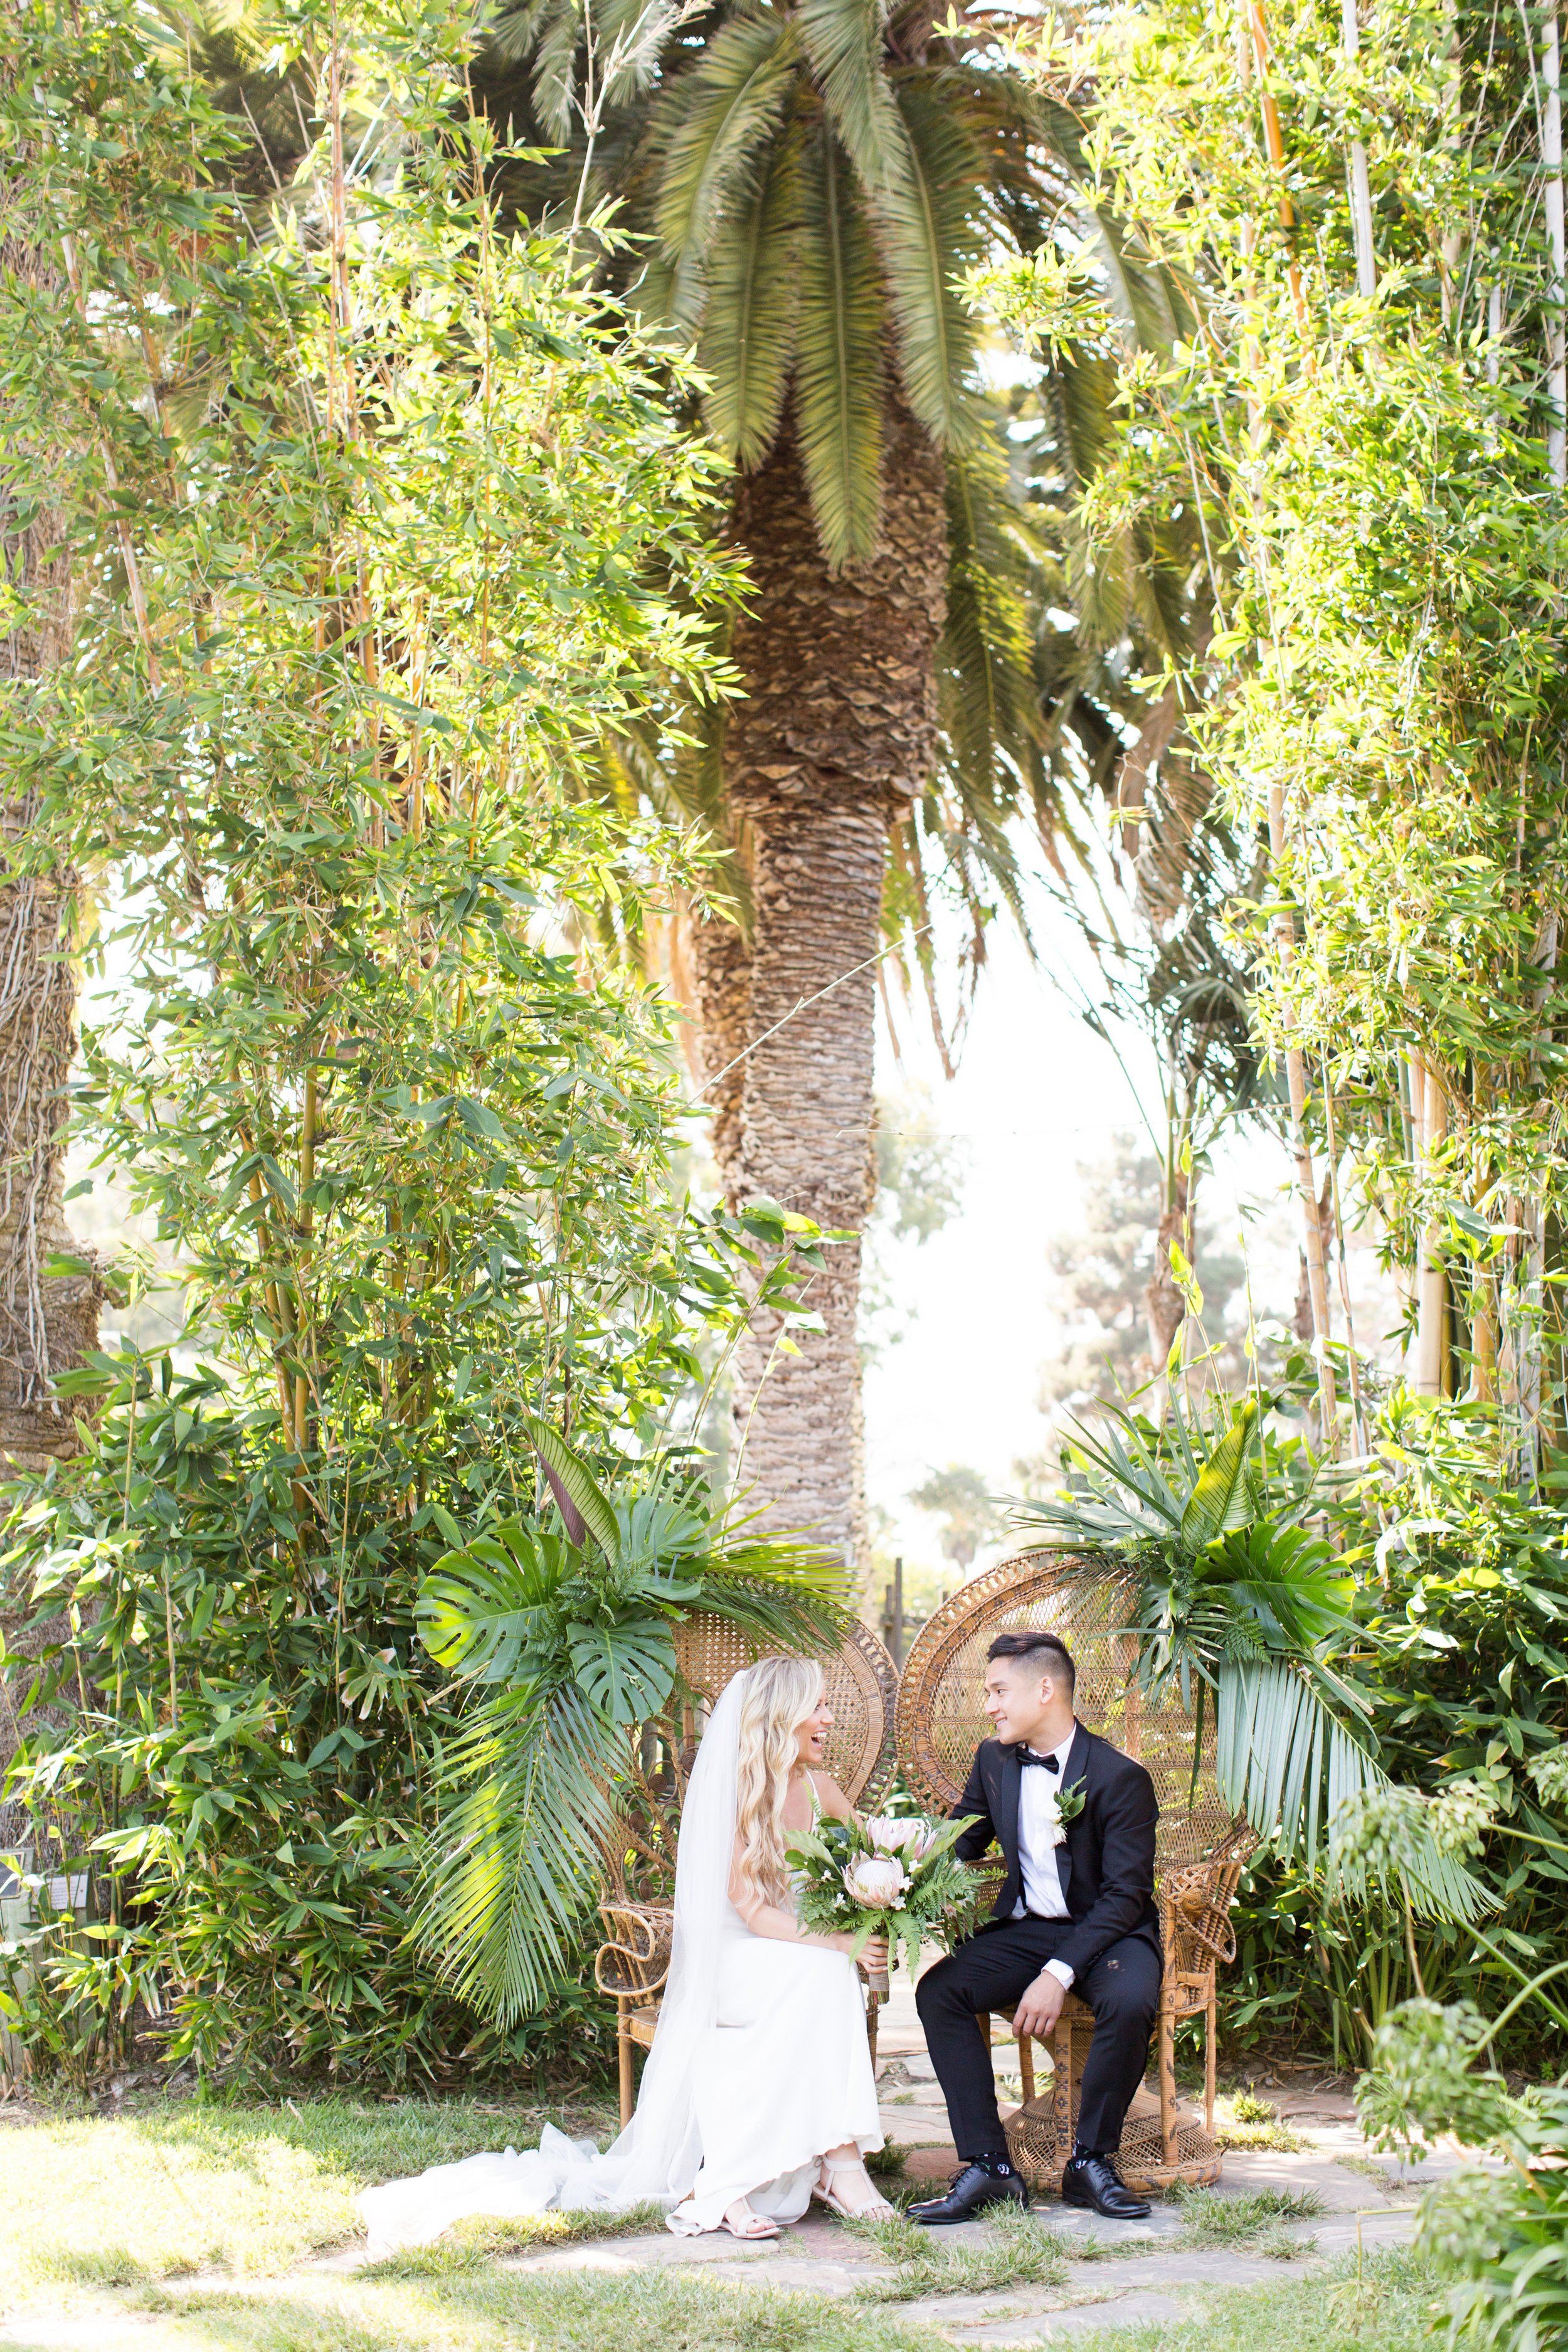 www.santabarbarawedding.com | Santa Barbara Zoo | Wonder Tribe | Events by Rincon | Bride and Groom